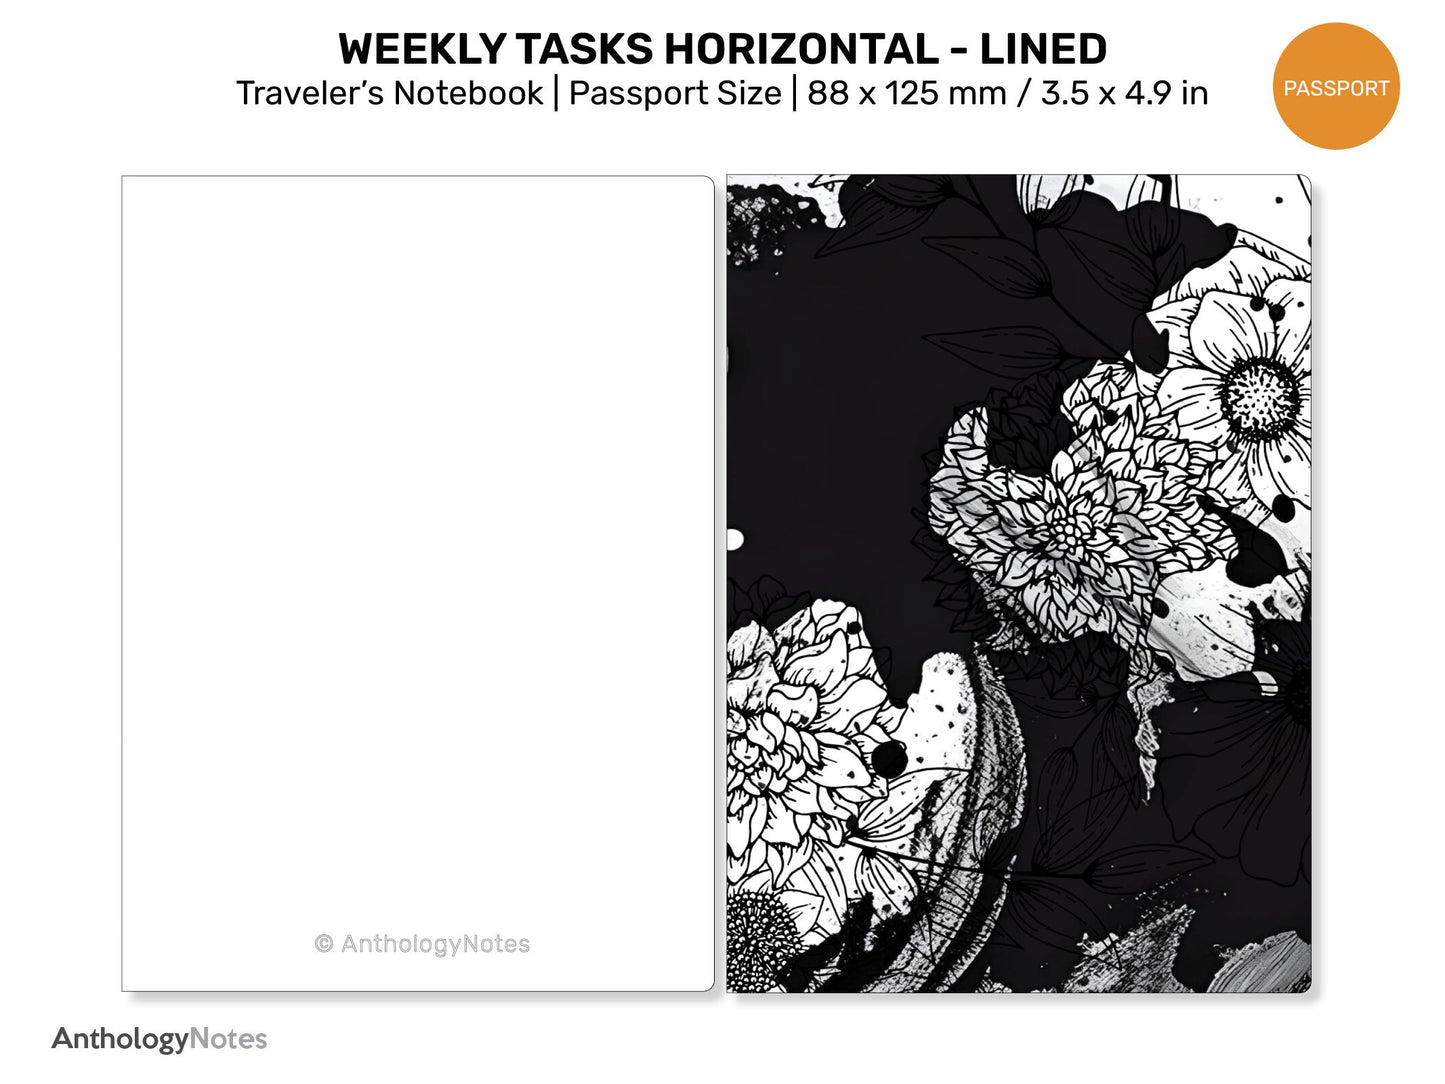 TN PASSPORT Weekly Horizontal Tasks List & Notes Lined Printable Refill Traveler's Notebook PP22-007